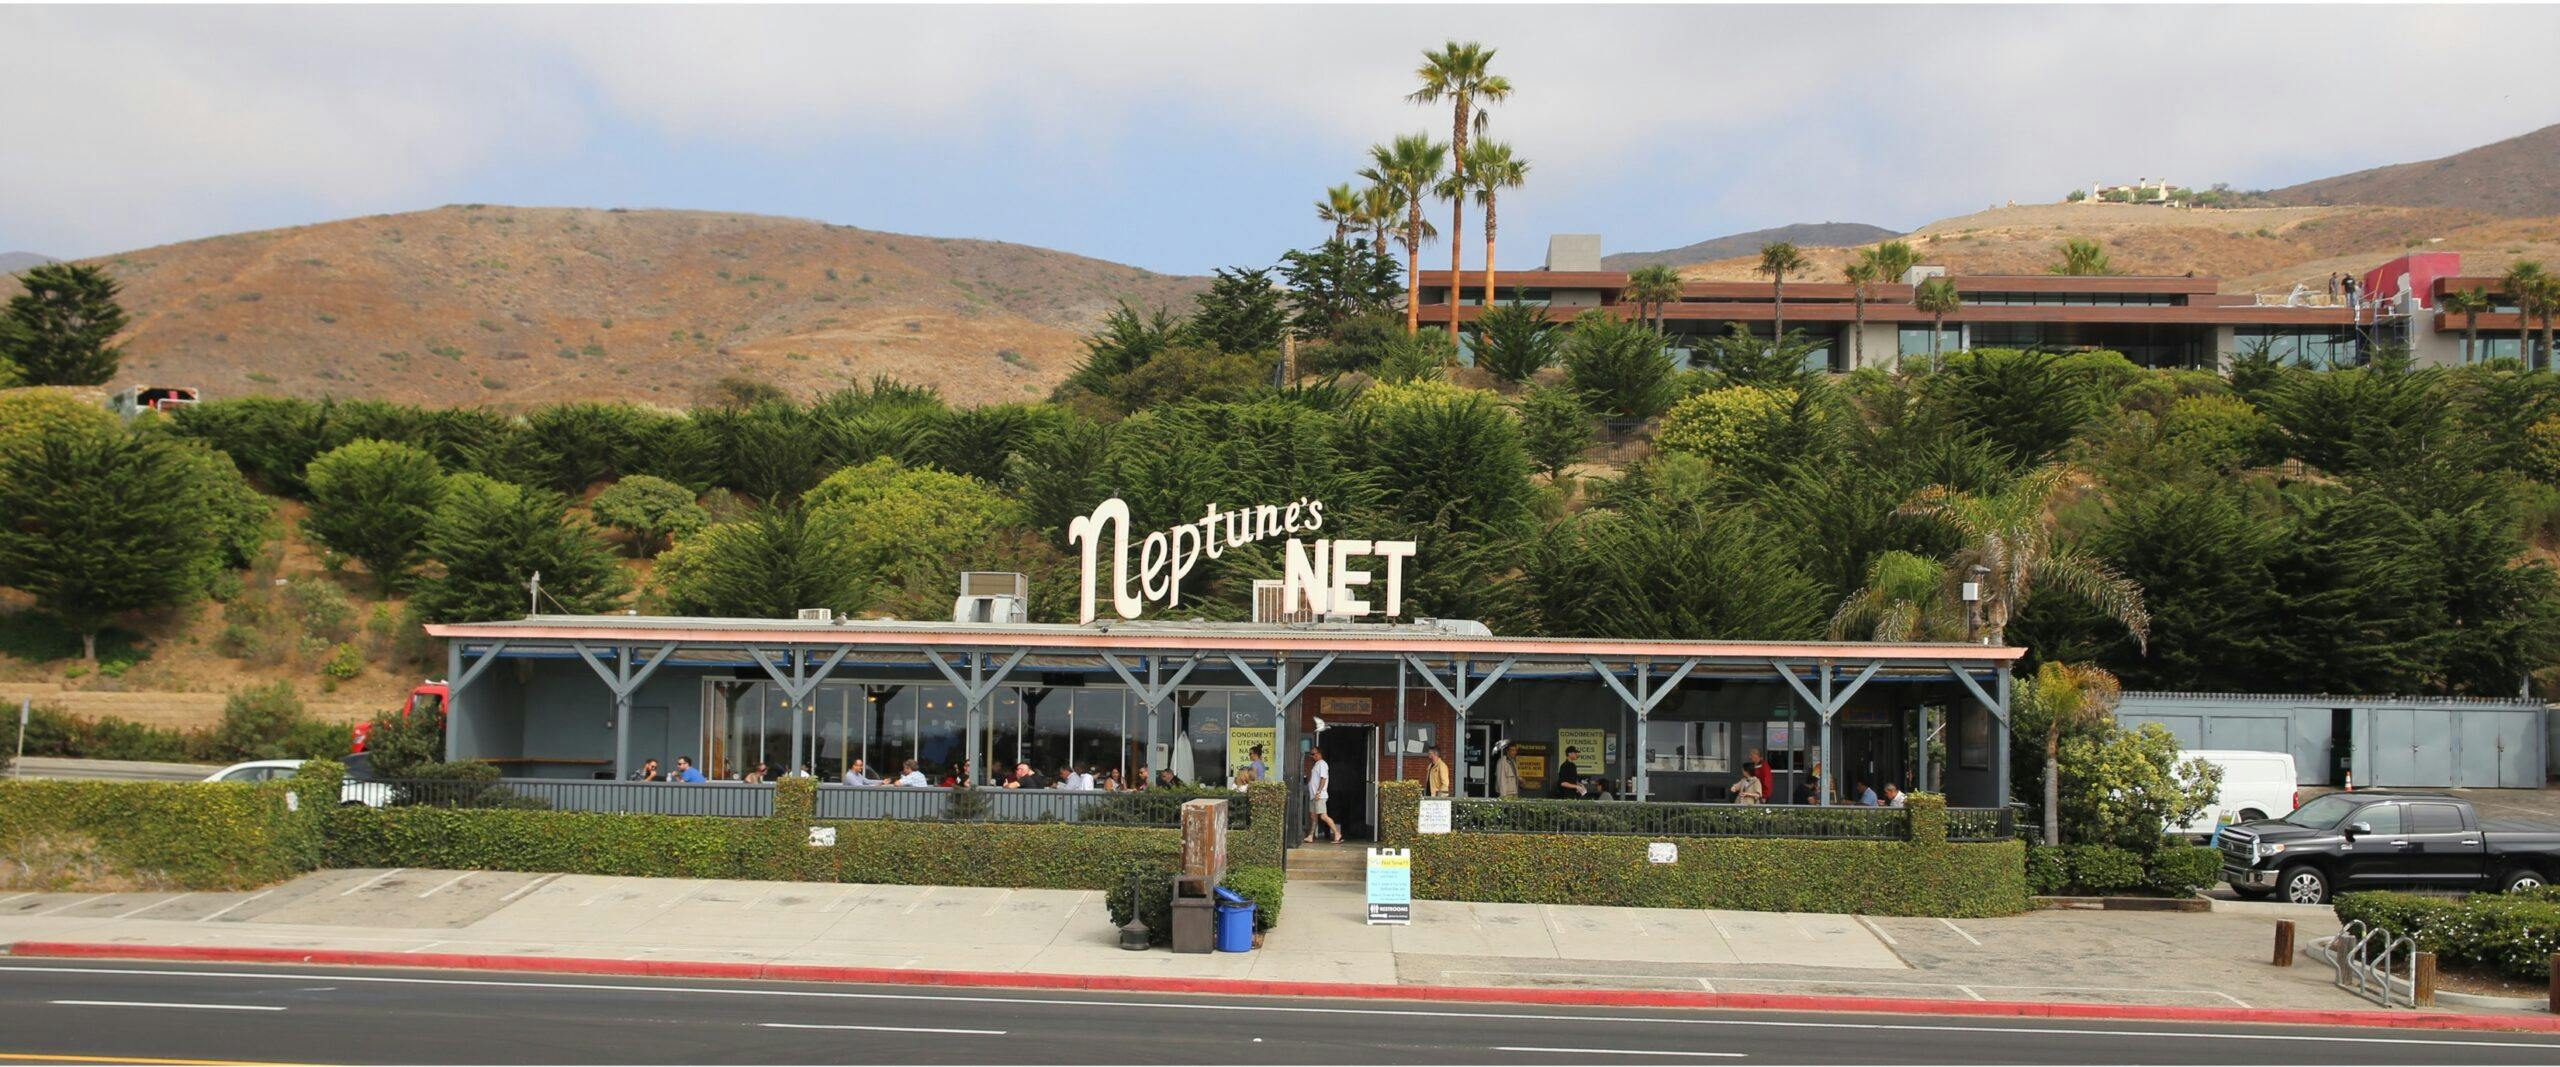 Neptune’s Net restaurant – a must-visit ‘pit stop’